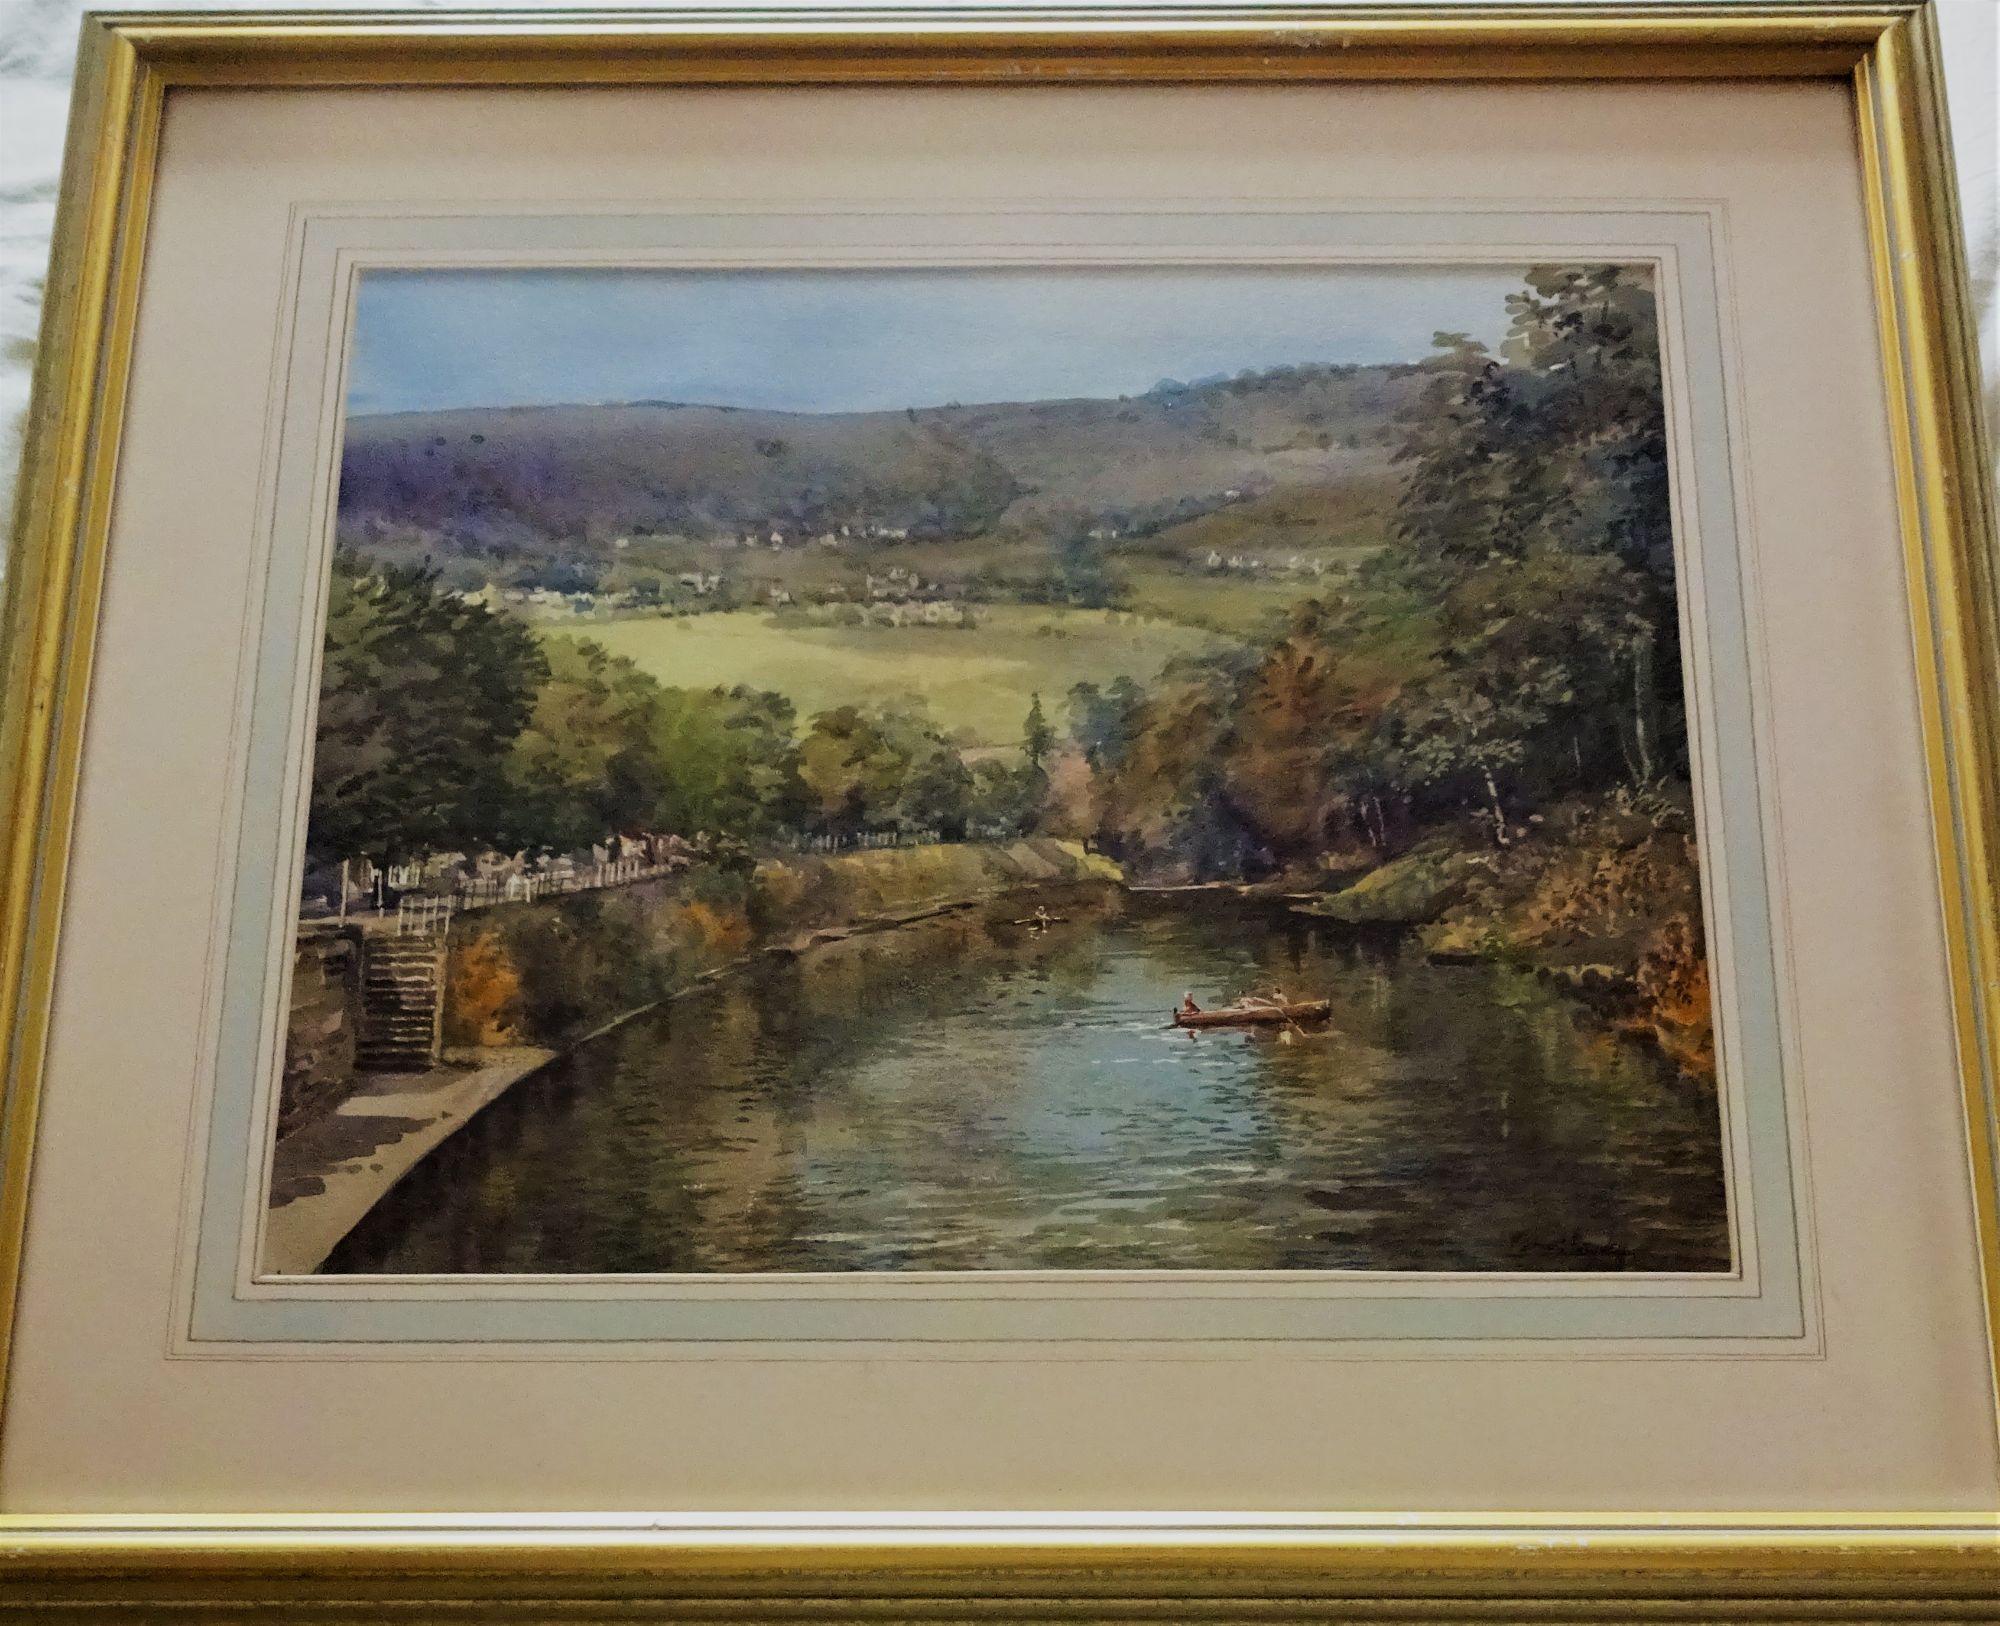 Michael Crawley, River Derwent Matlock Bath, c1975.